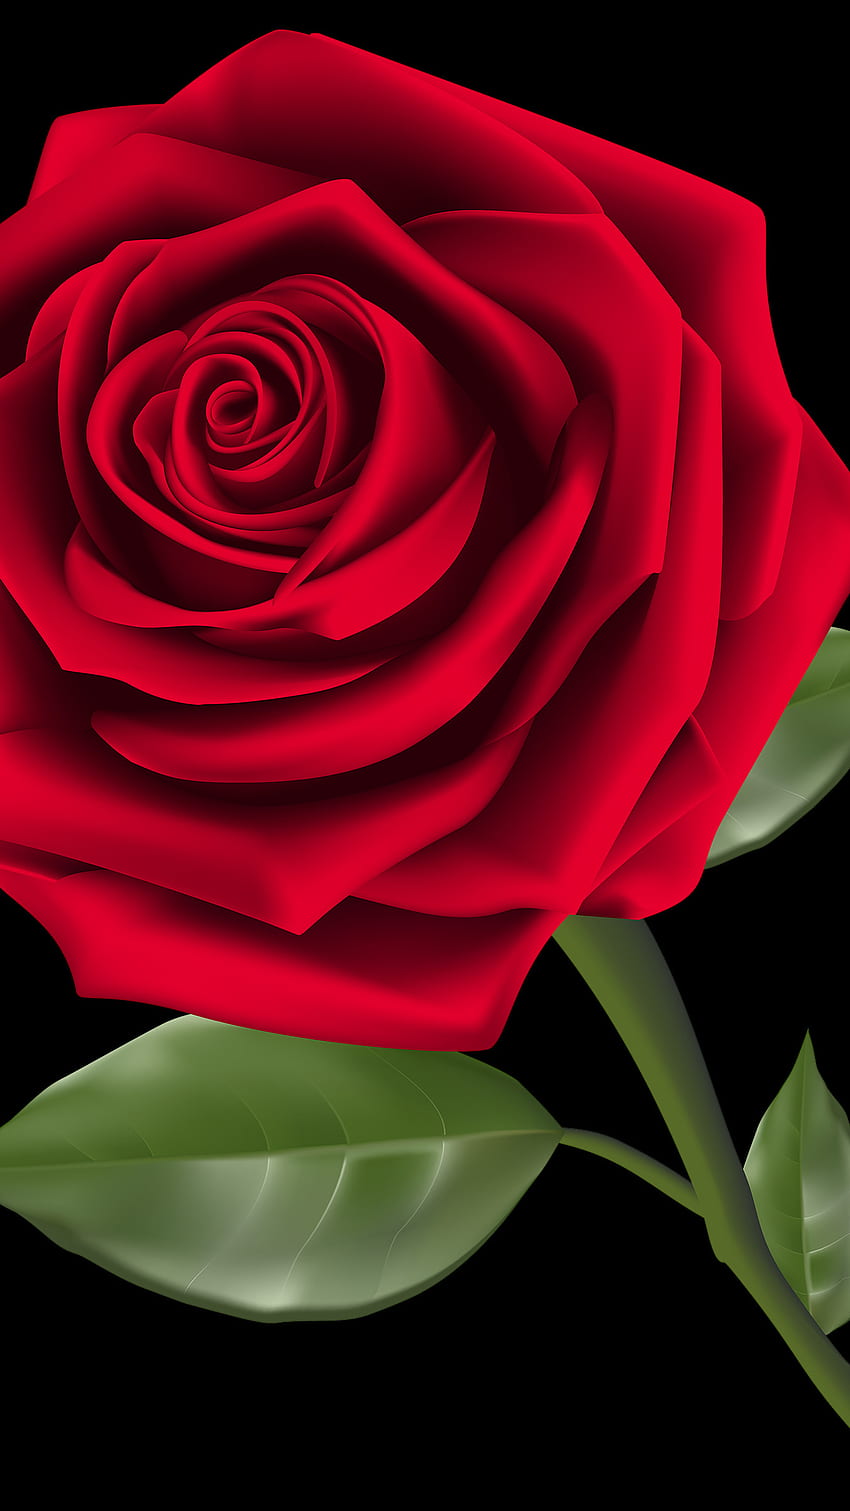 Rose Wallpaper , Rose Images - Apps on Google Play